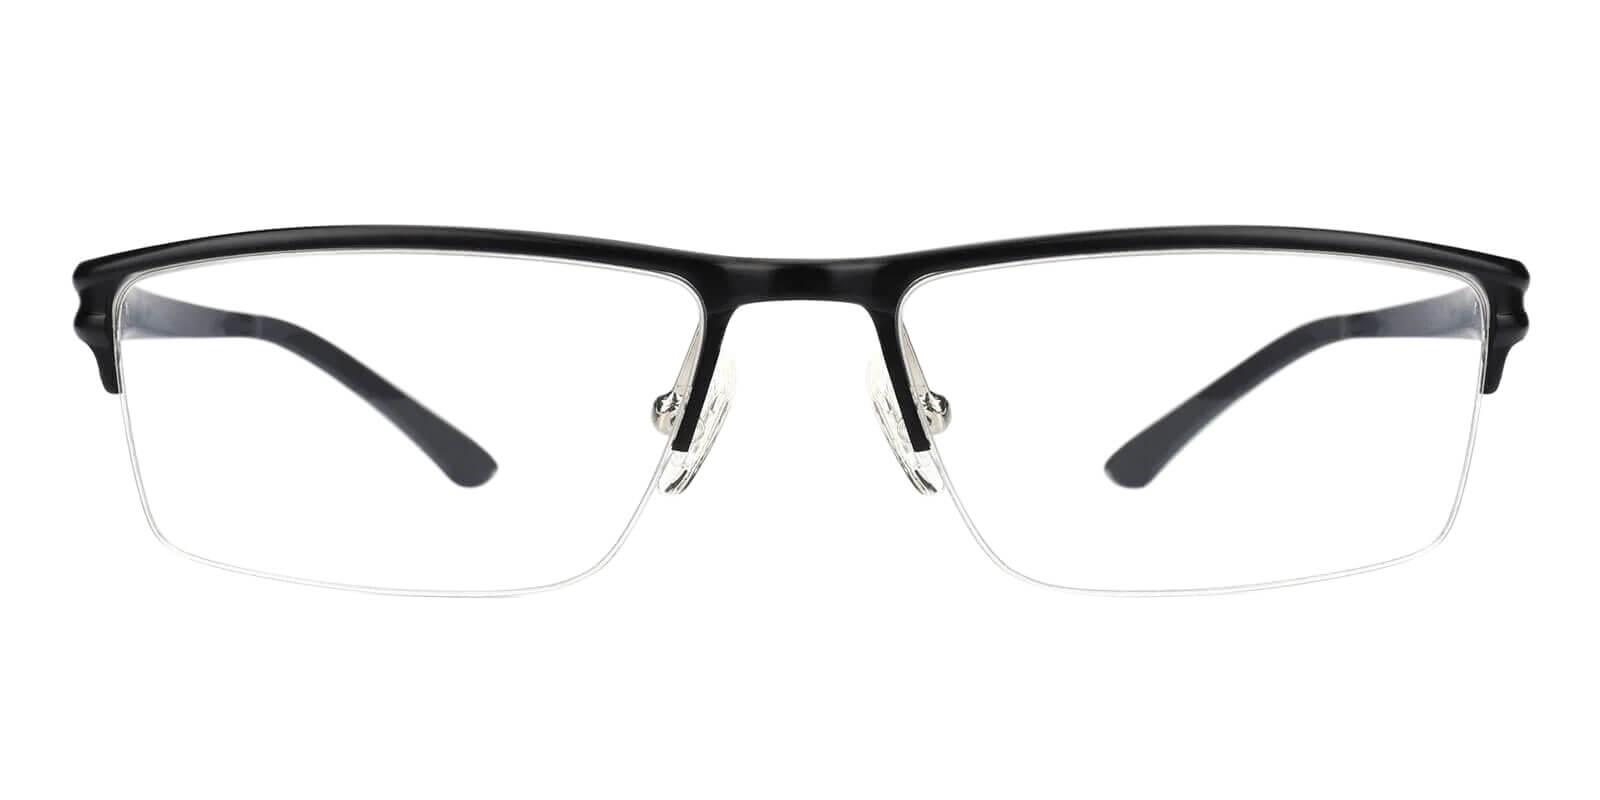 Cosmo Black Metal NosePads , SportsGlasses Frames from ABBE Glasses